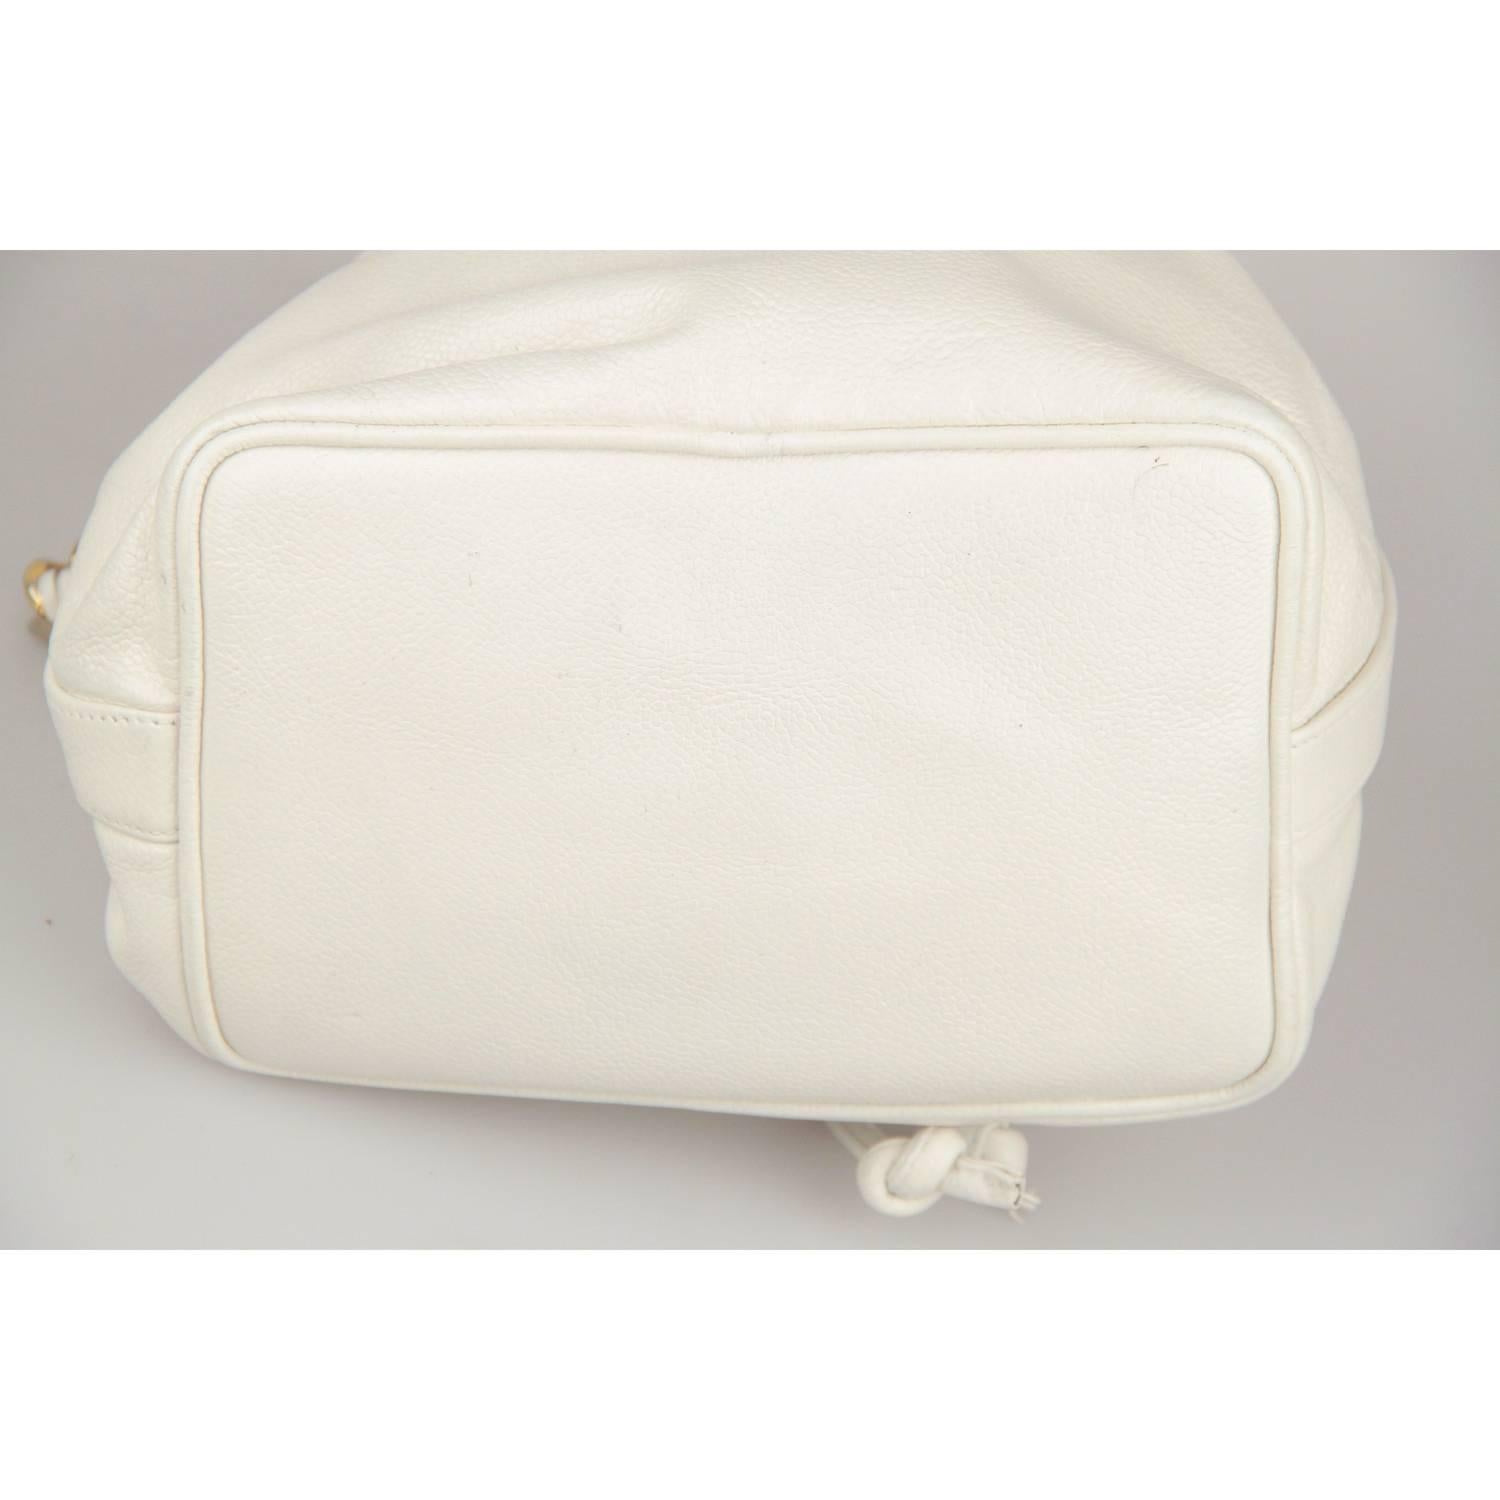 Women's CHANEL Vintage White Leather DRAWSTRING BAG with CC LOGO